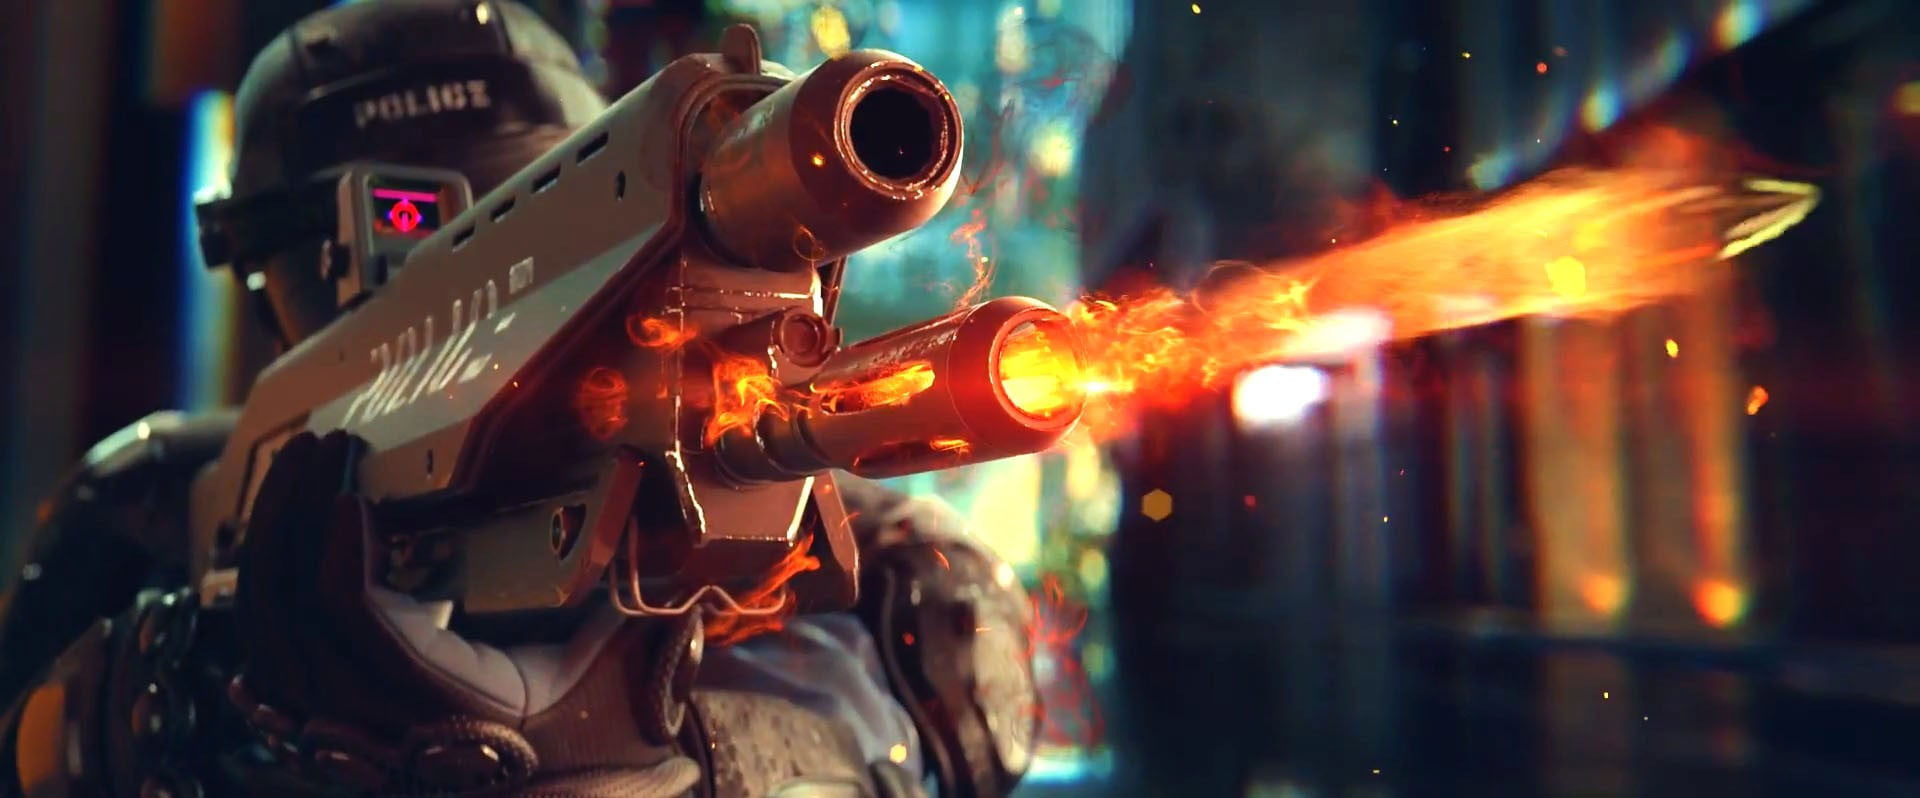 Wallpaper Cgi, Gun, Cyberpunk 2077, Weapon, Video Games